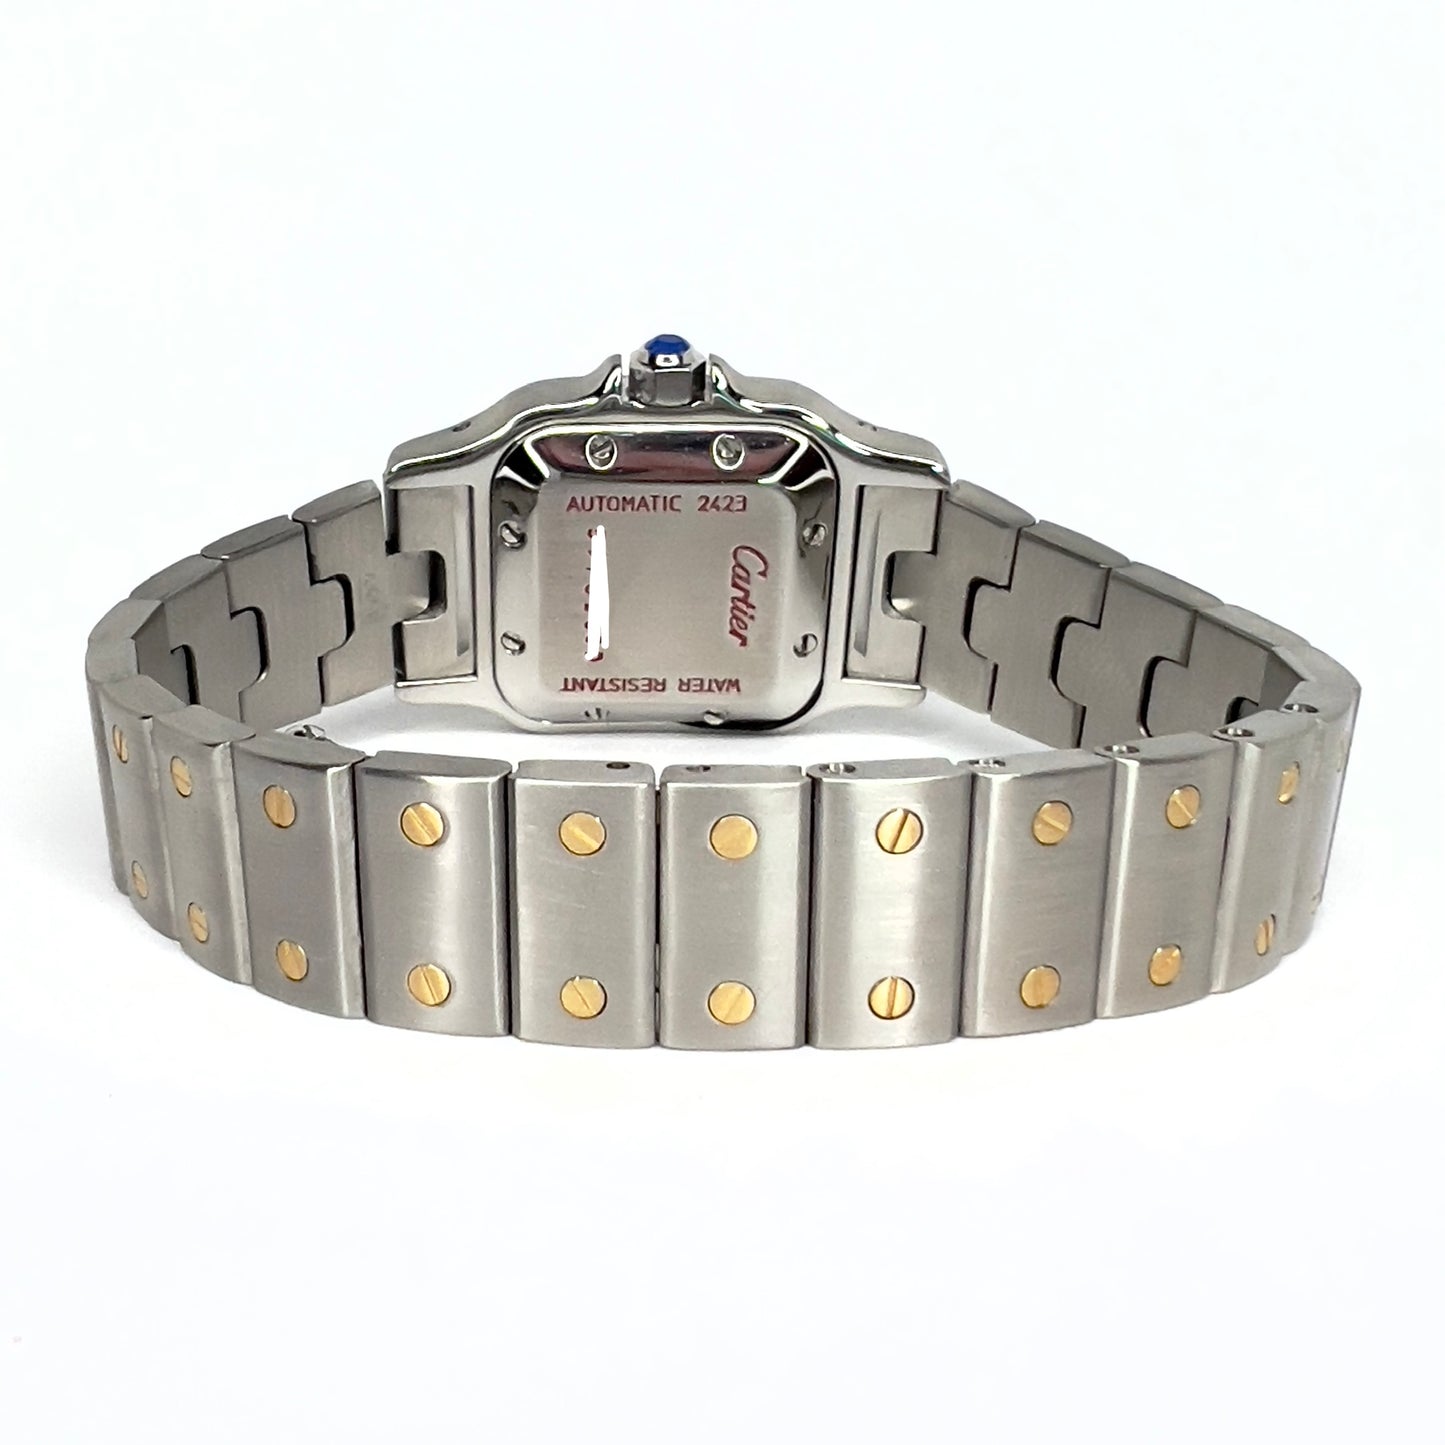 CARTIER SANTOS GALBEE Date 24mm Automatic 2 Tone 0.69TCW Diamond Watch NEW Model